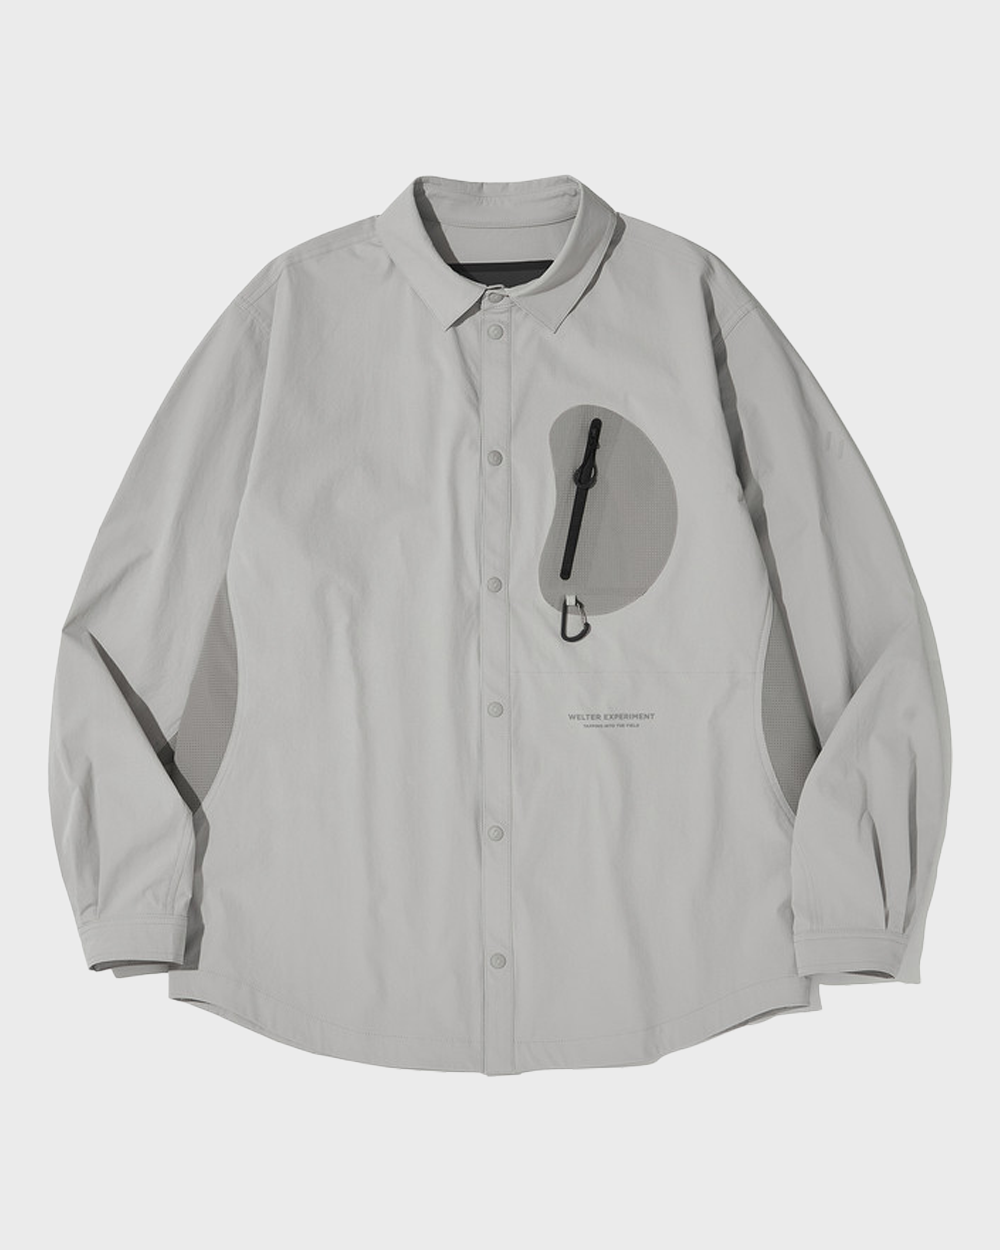 Heart Pocket Shirt Jacket (Light Gray)